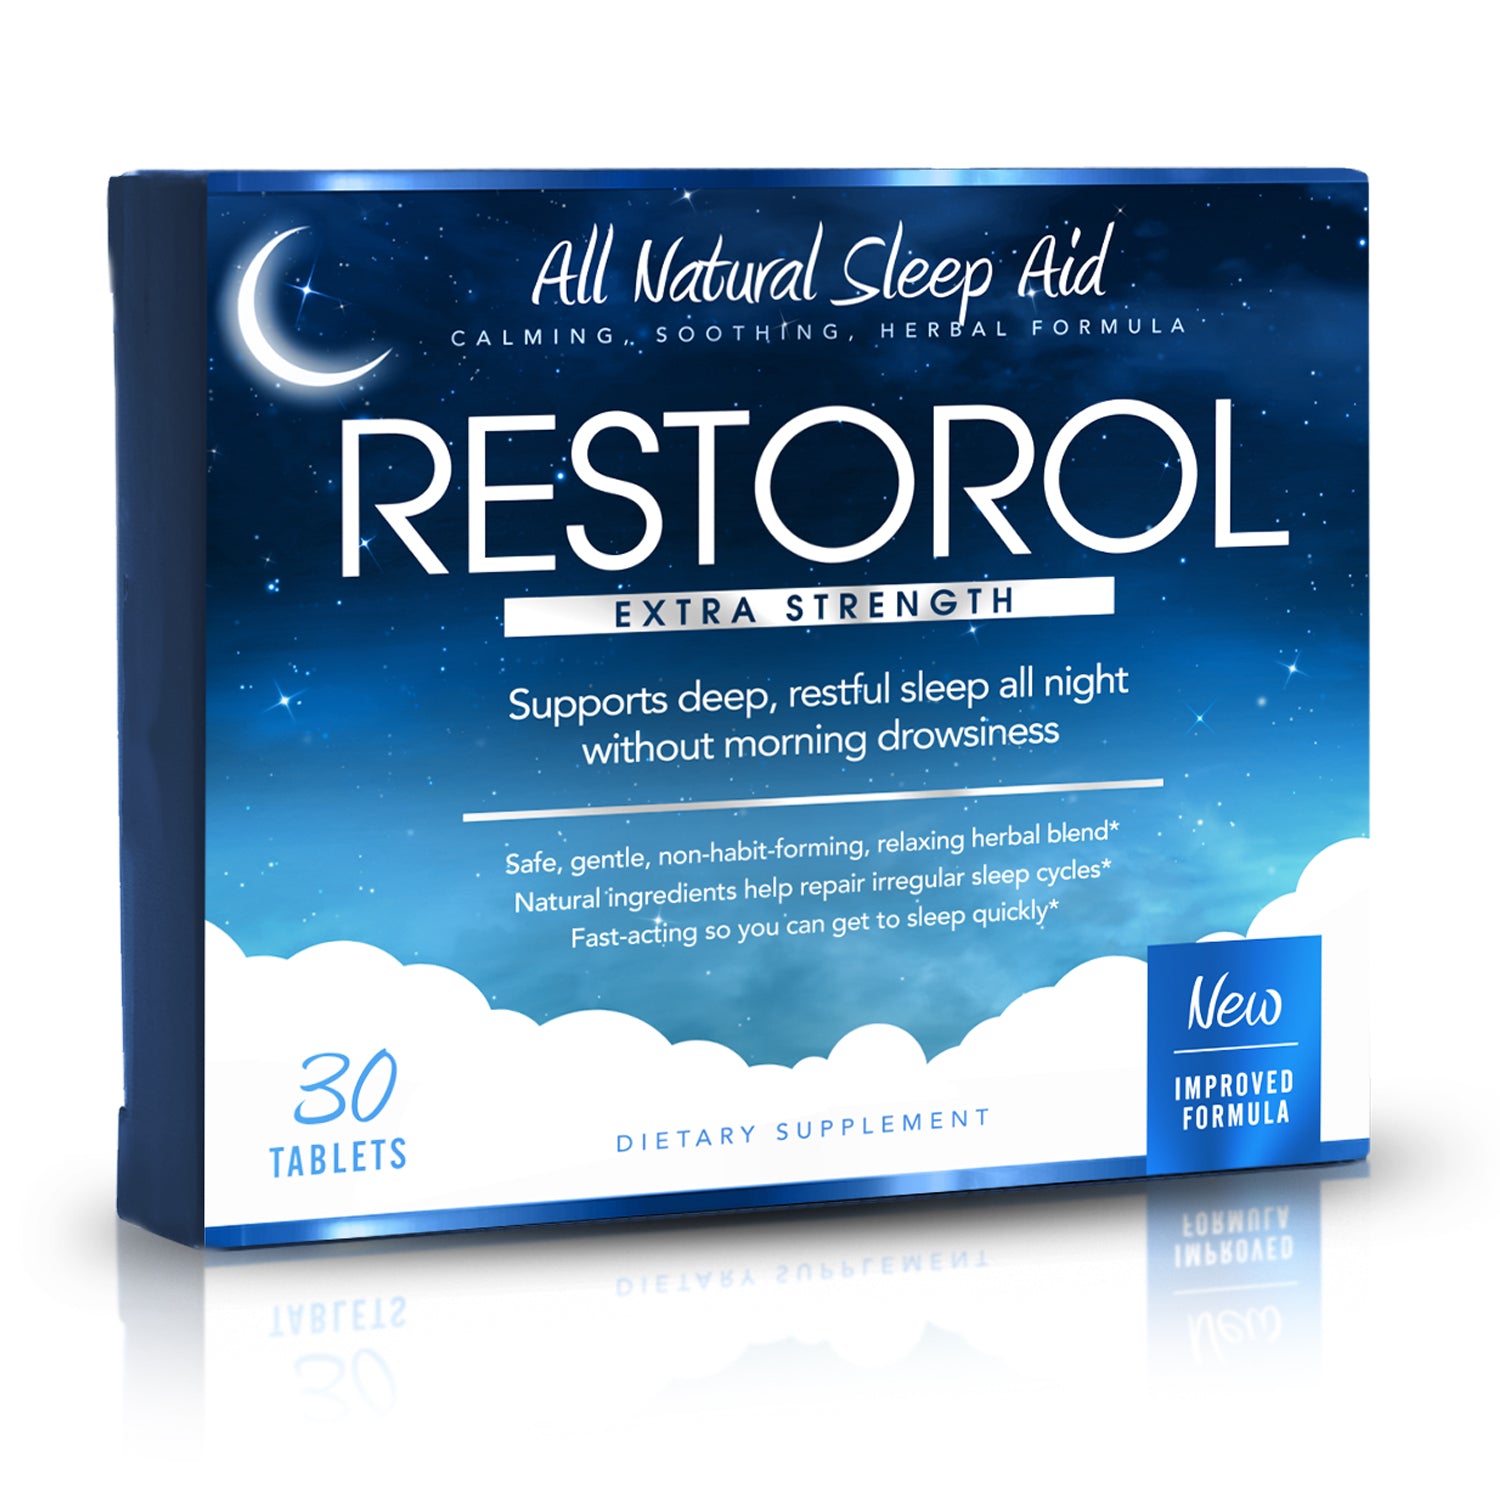 Restorol Extra Strength Sleep Aid Vital Depot Reviews on Judge.me